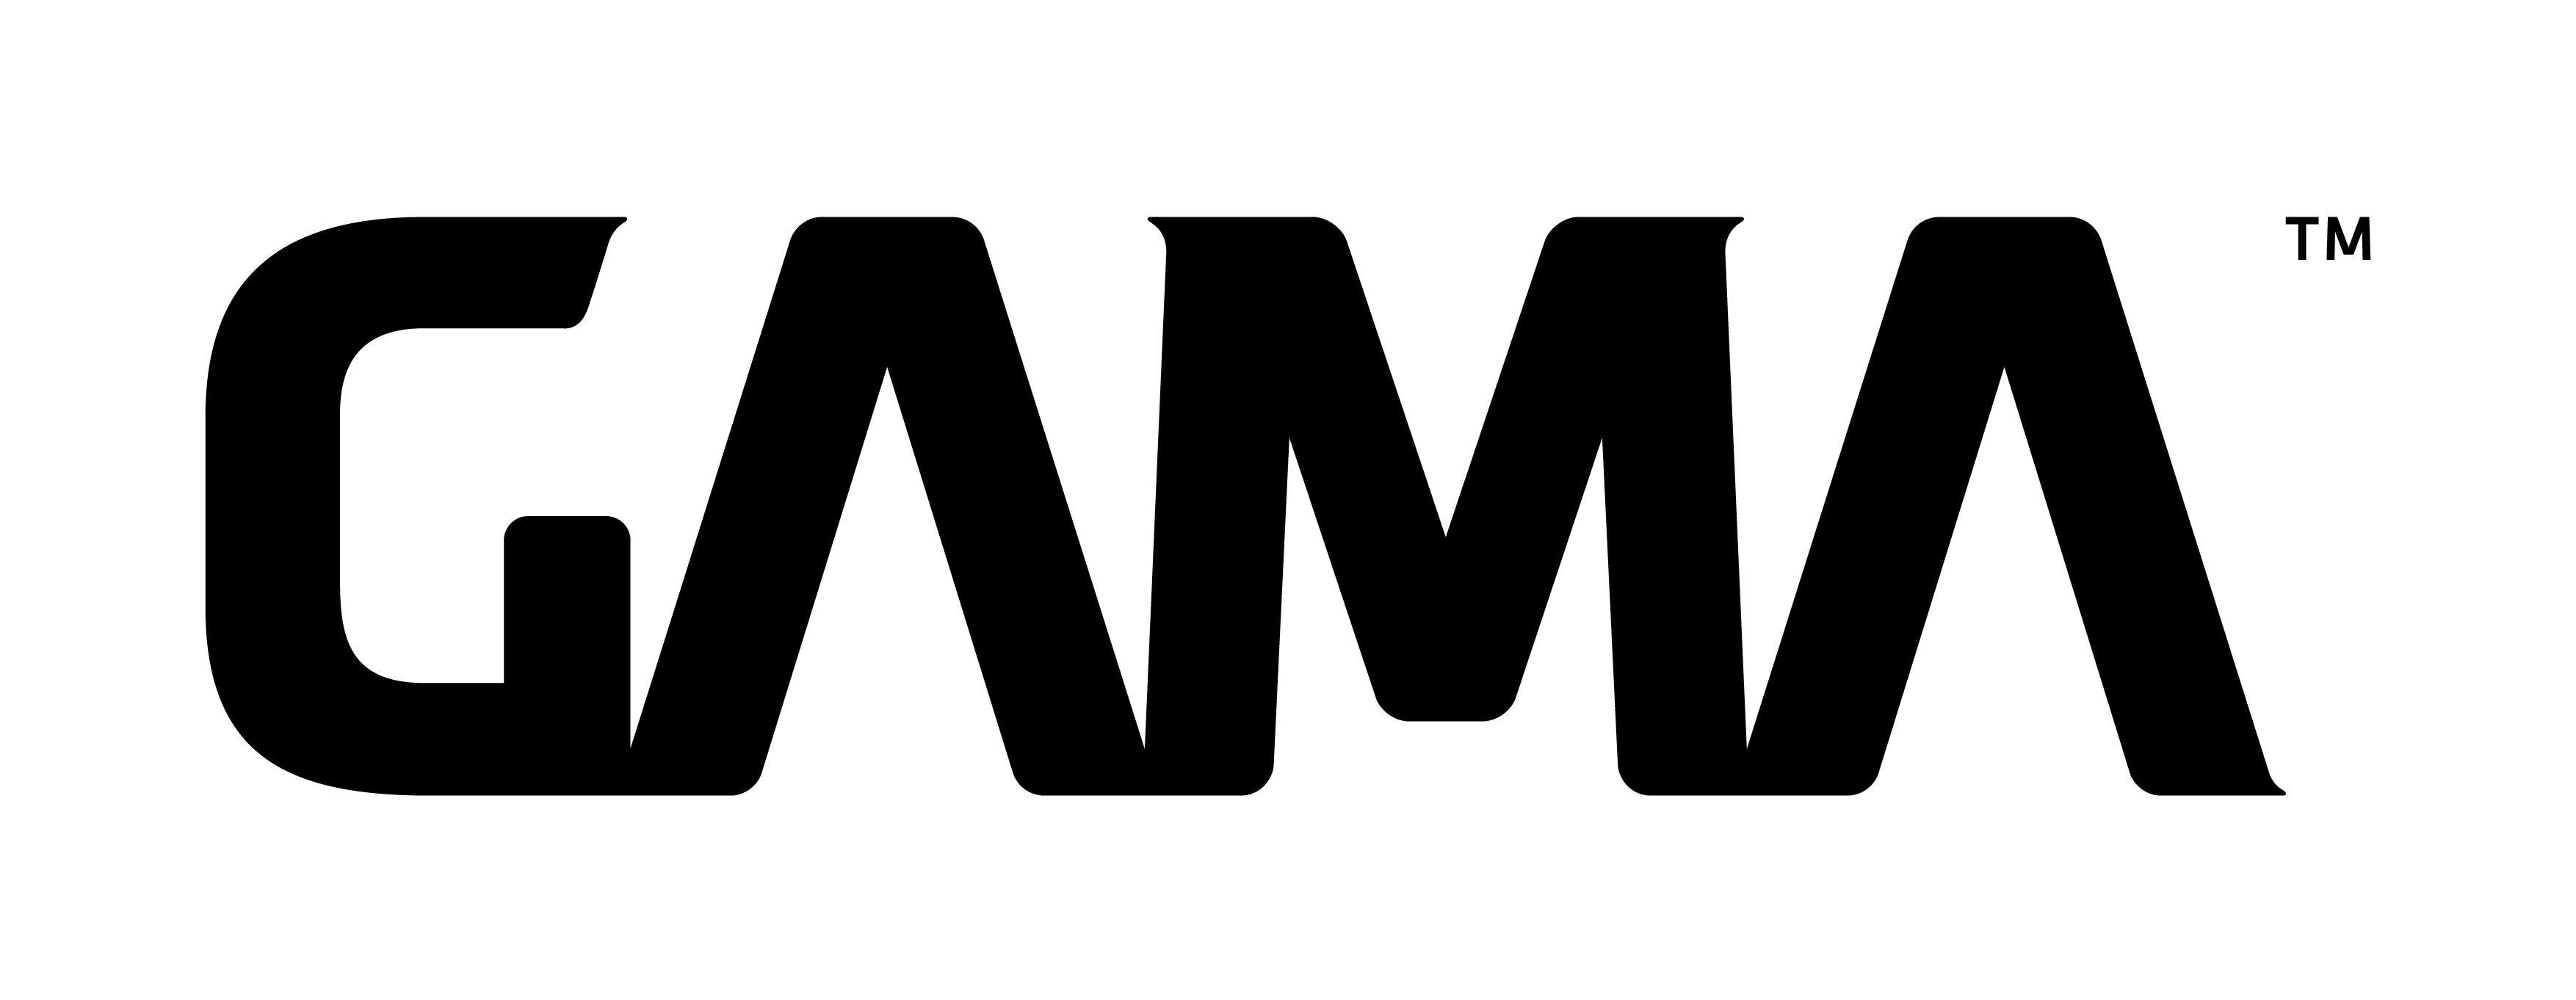 Gama Logo - Gama Research Ltd. – Istanbul Health Industry Cluster